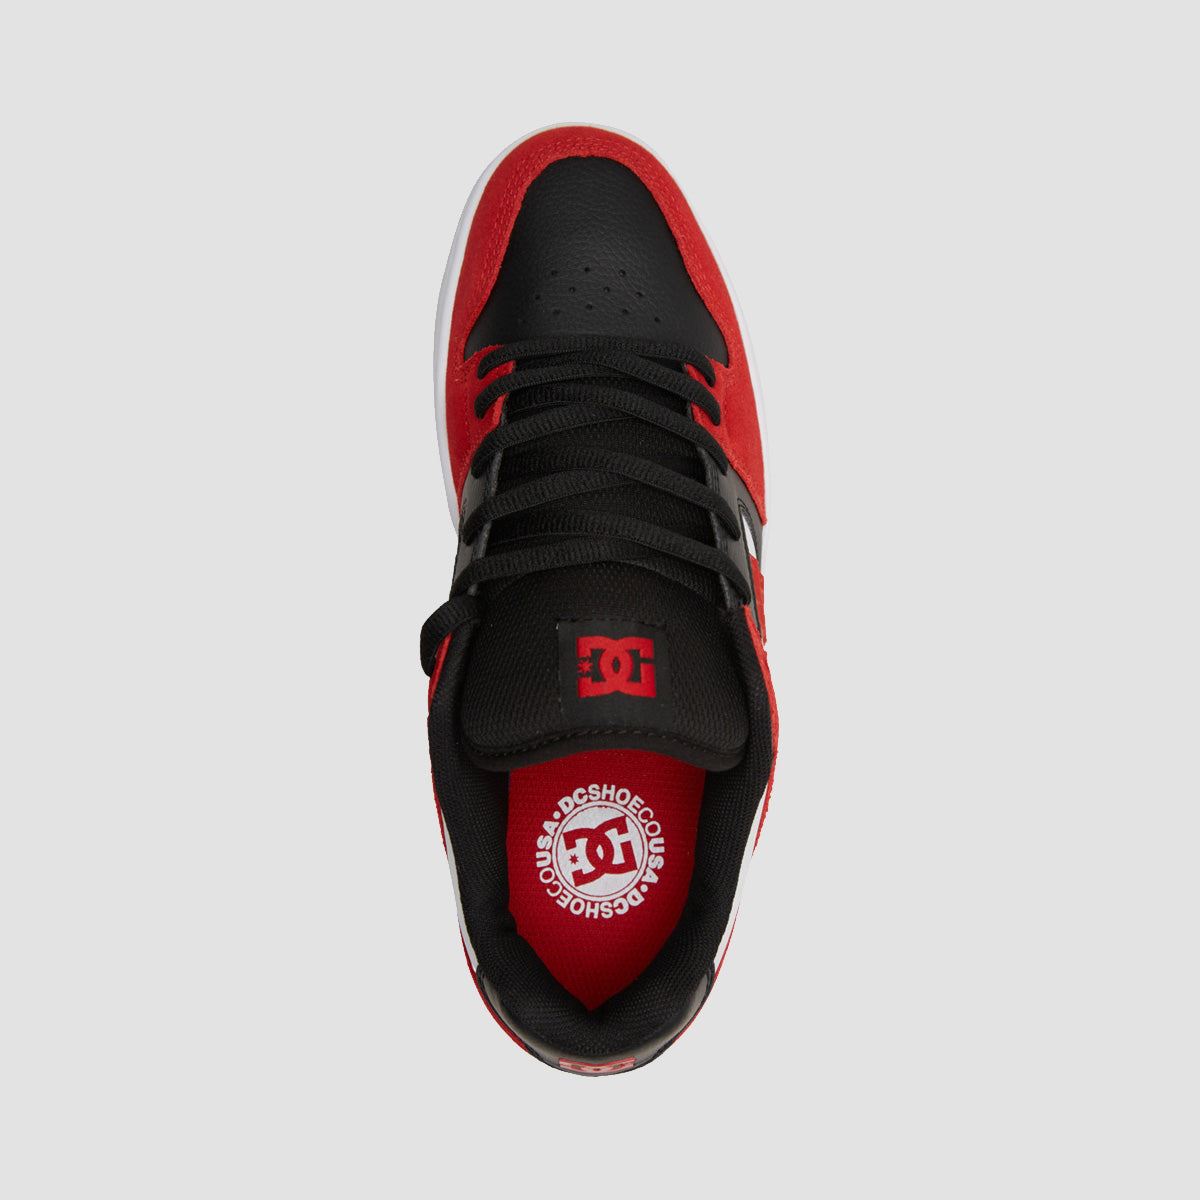 DC Manteca 4 S Shoes - Red/Black/White